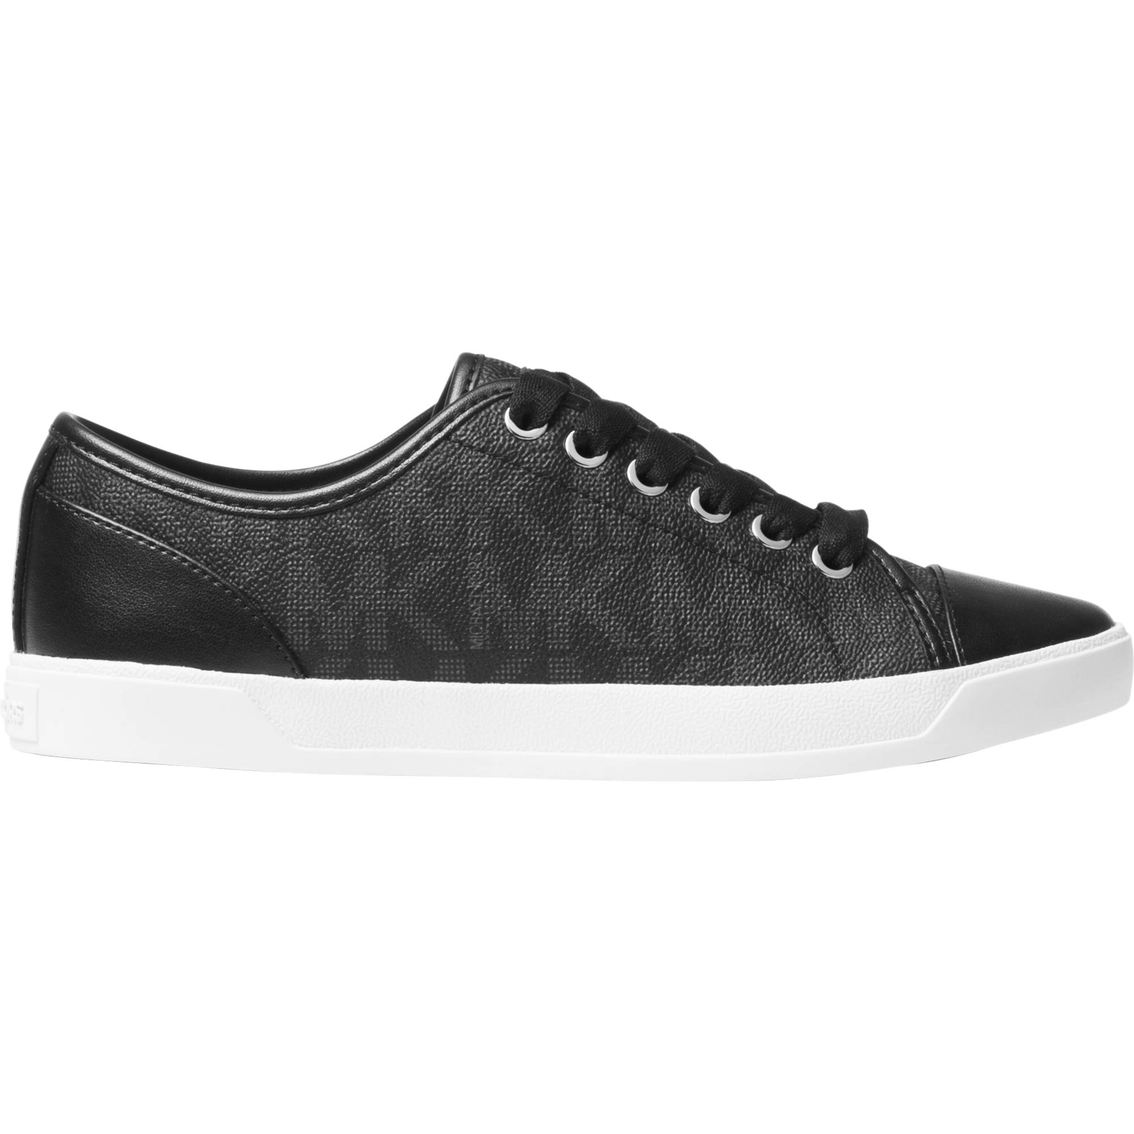 Michael Kors Women's Mk City Sneakers | Sneakers & Lifestyle | Shop The ...